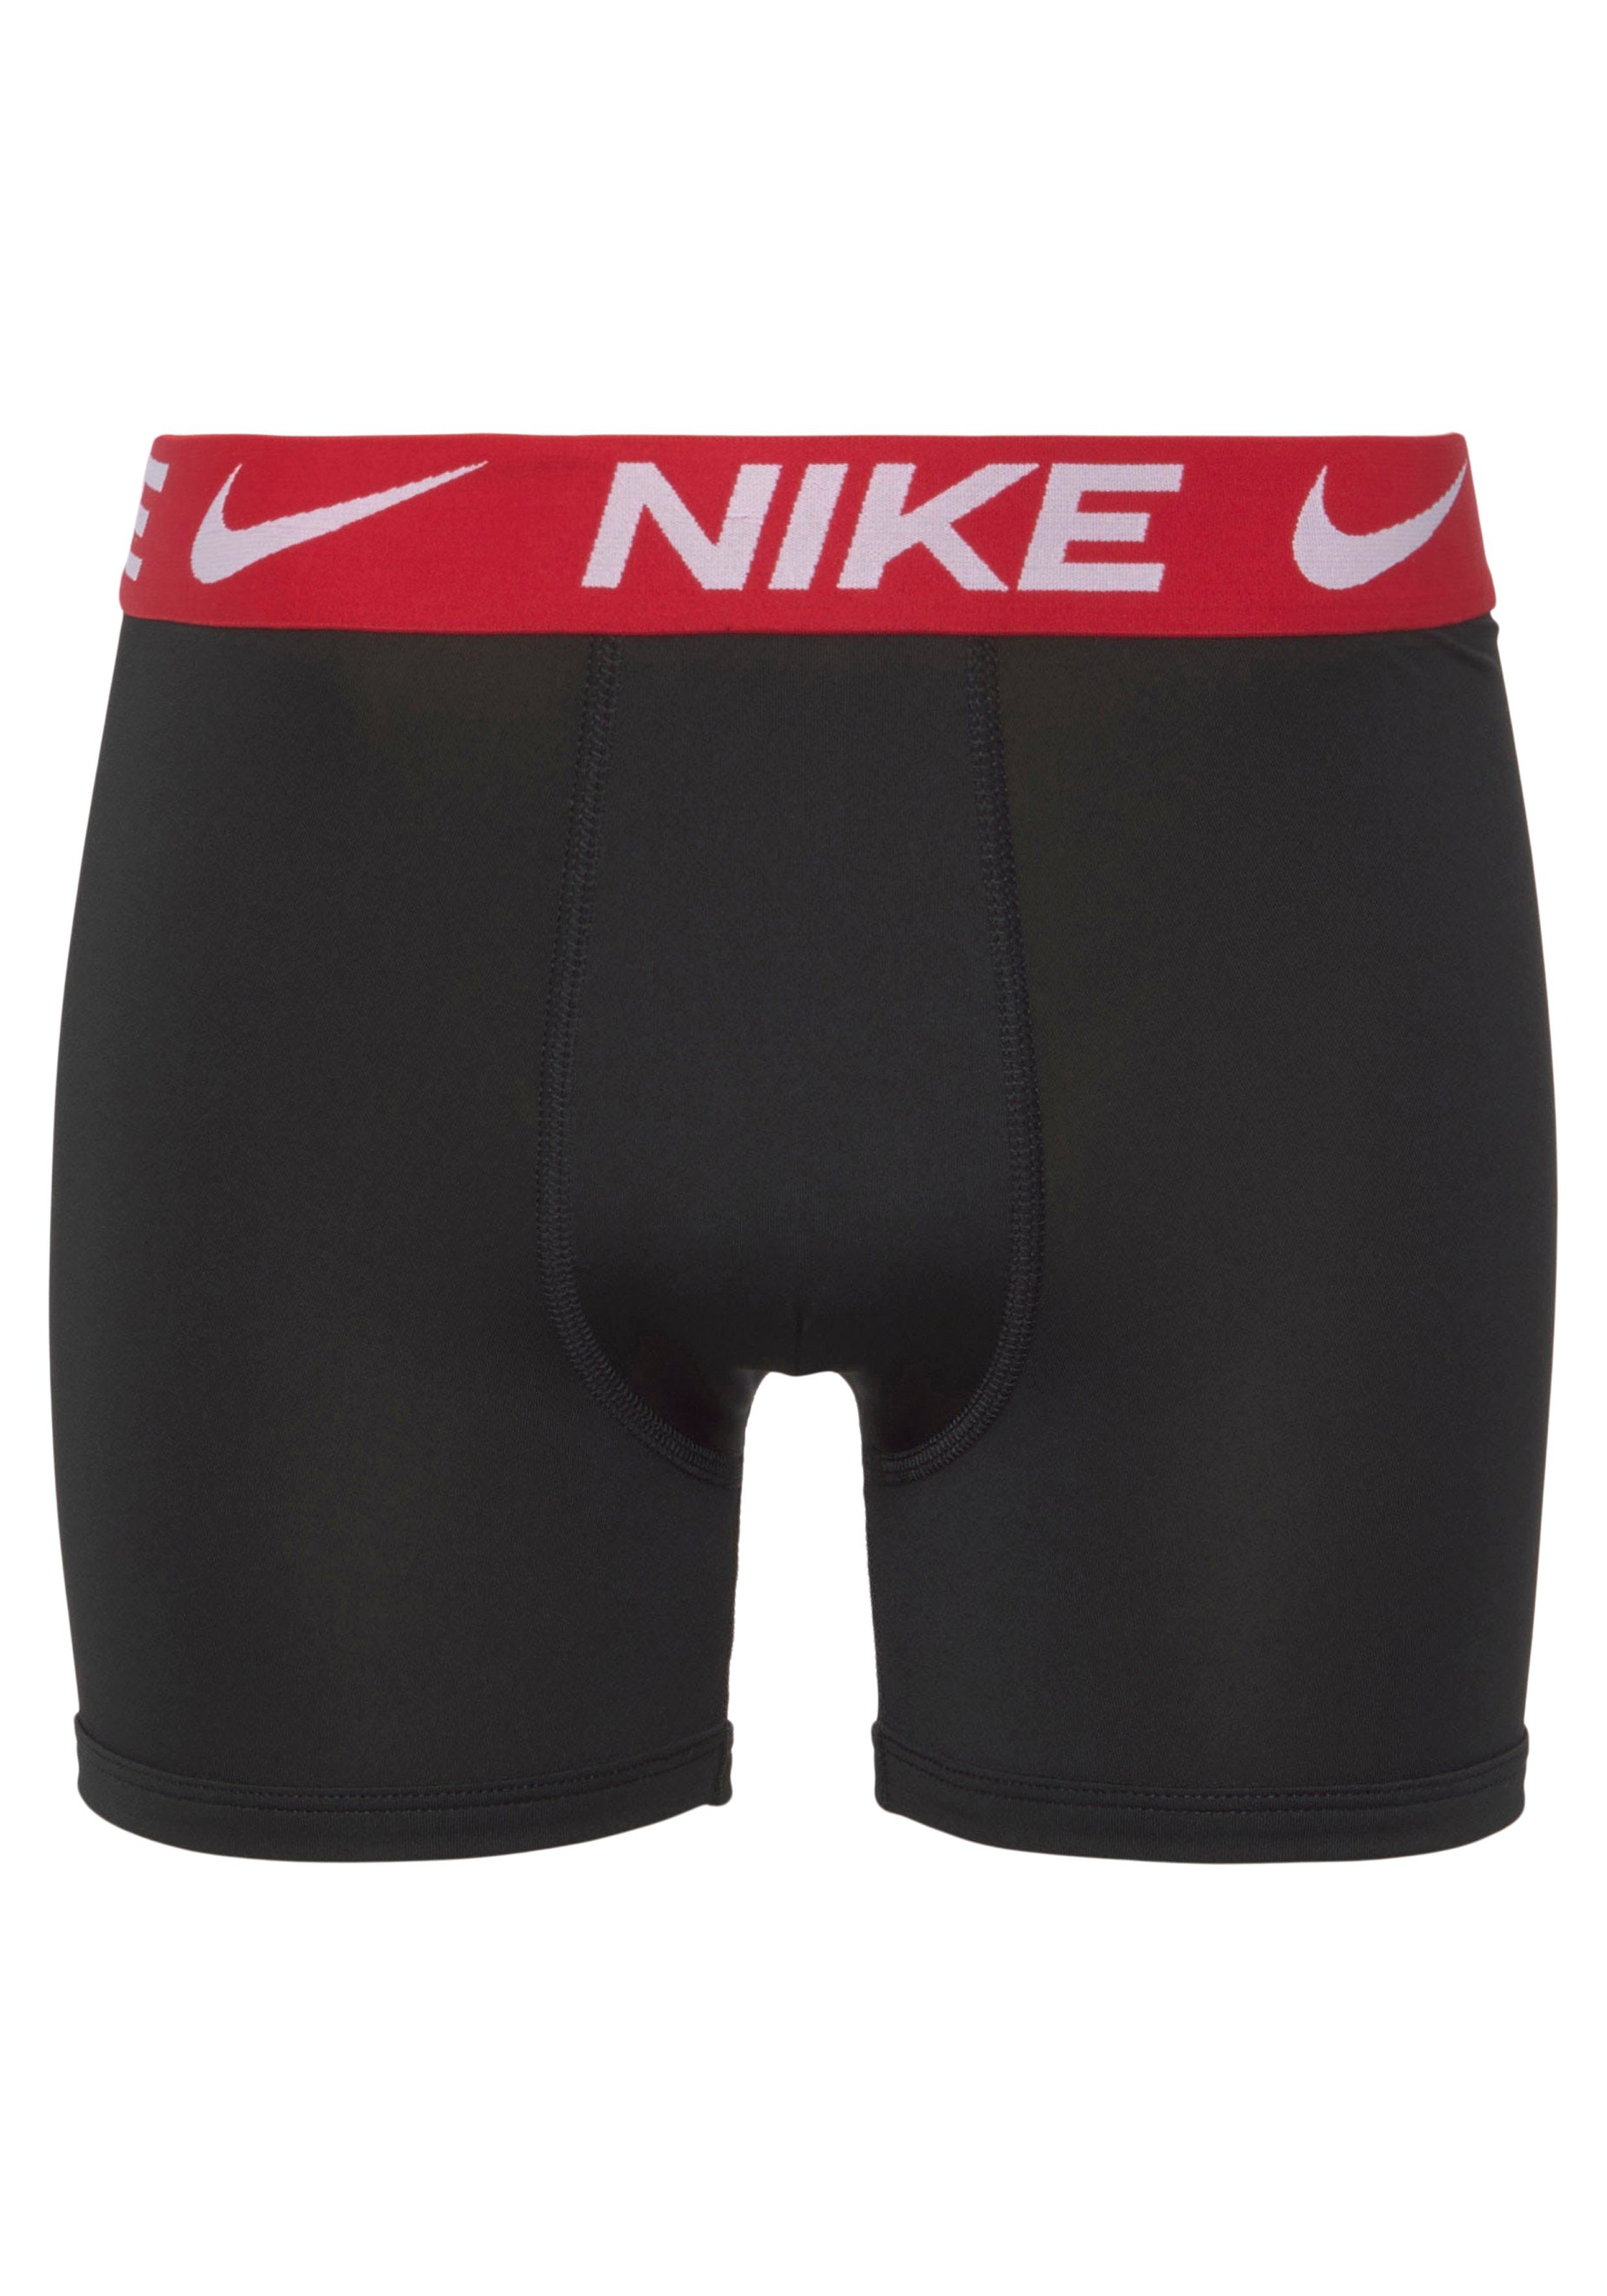 3-St) university red Nike für Sportswear Kinder Boxershorts (Packung,